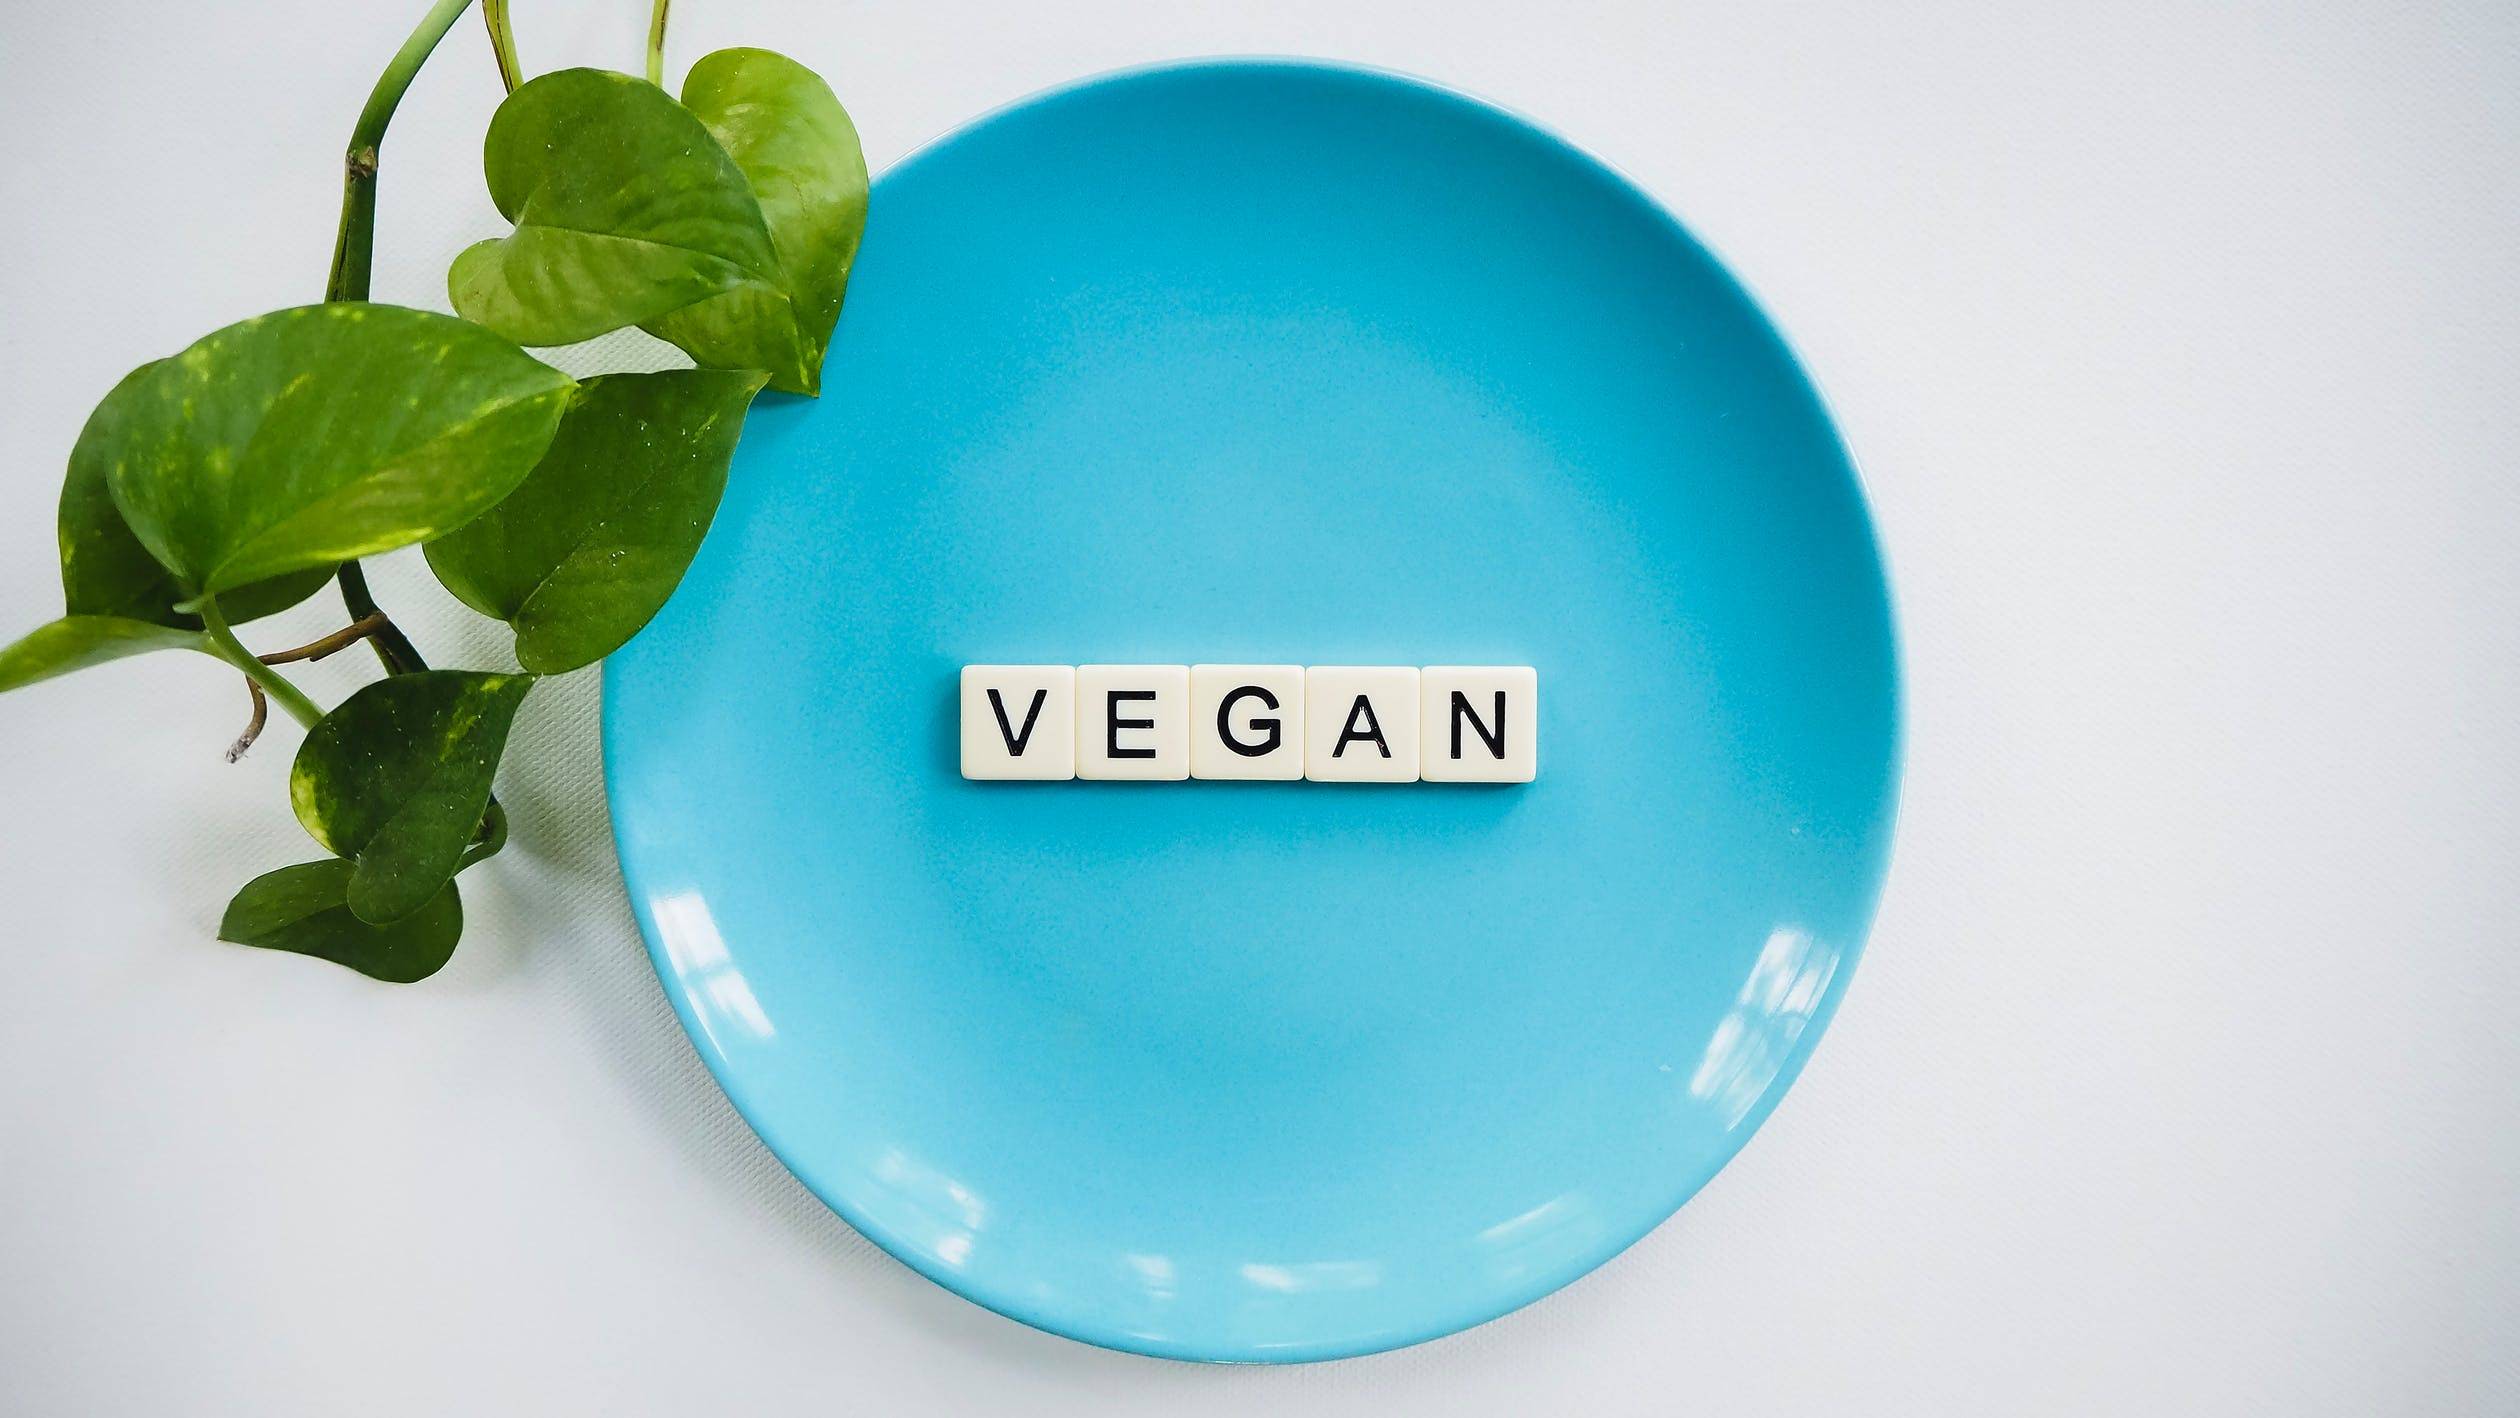 Vegan Letters On Plate